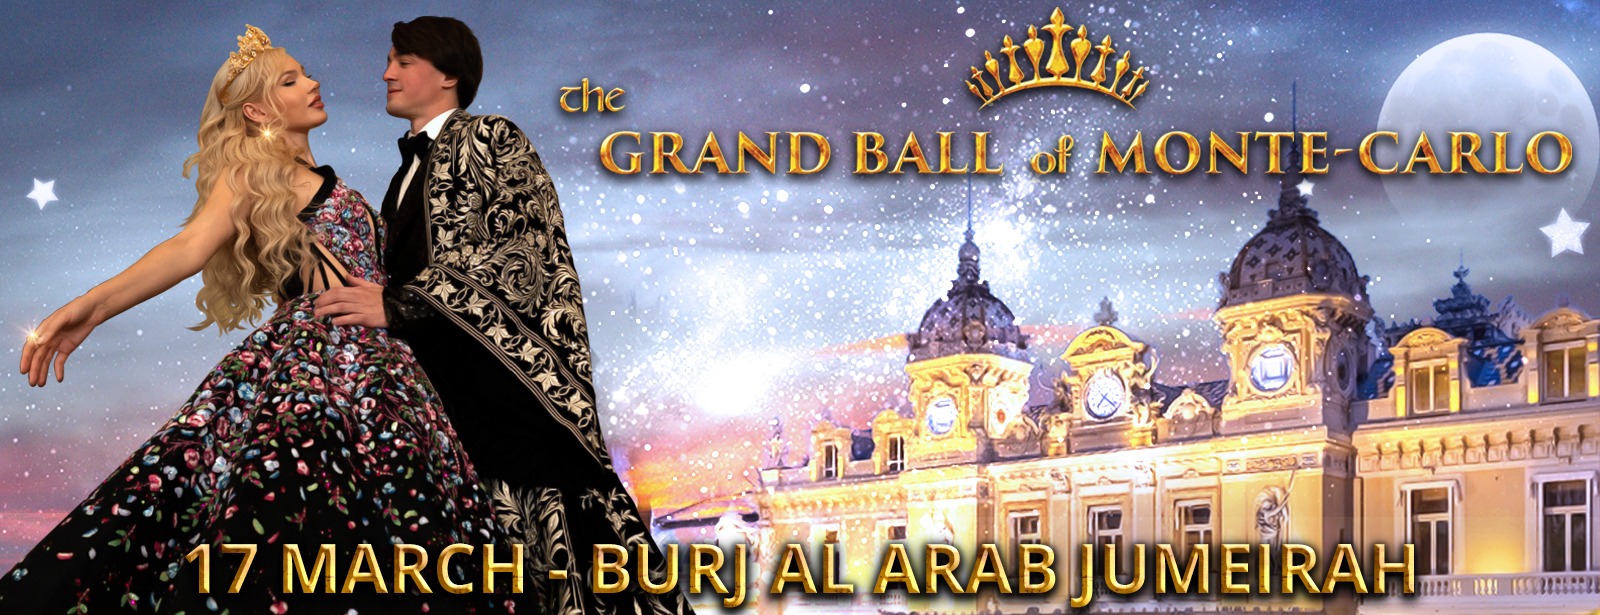 The Grand Ball of Monte-Carlo in Dubai - Coming Soon in UAE